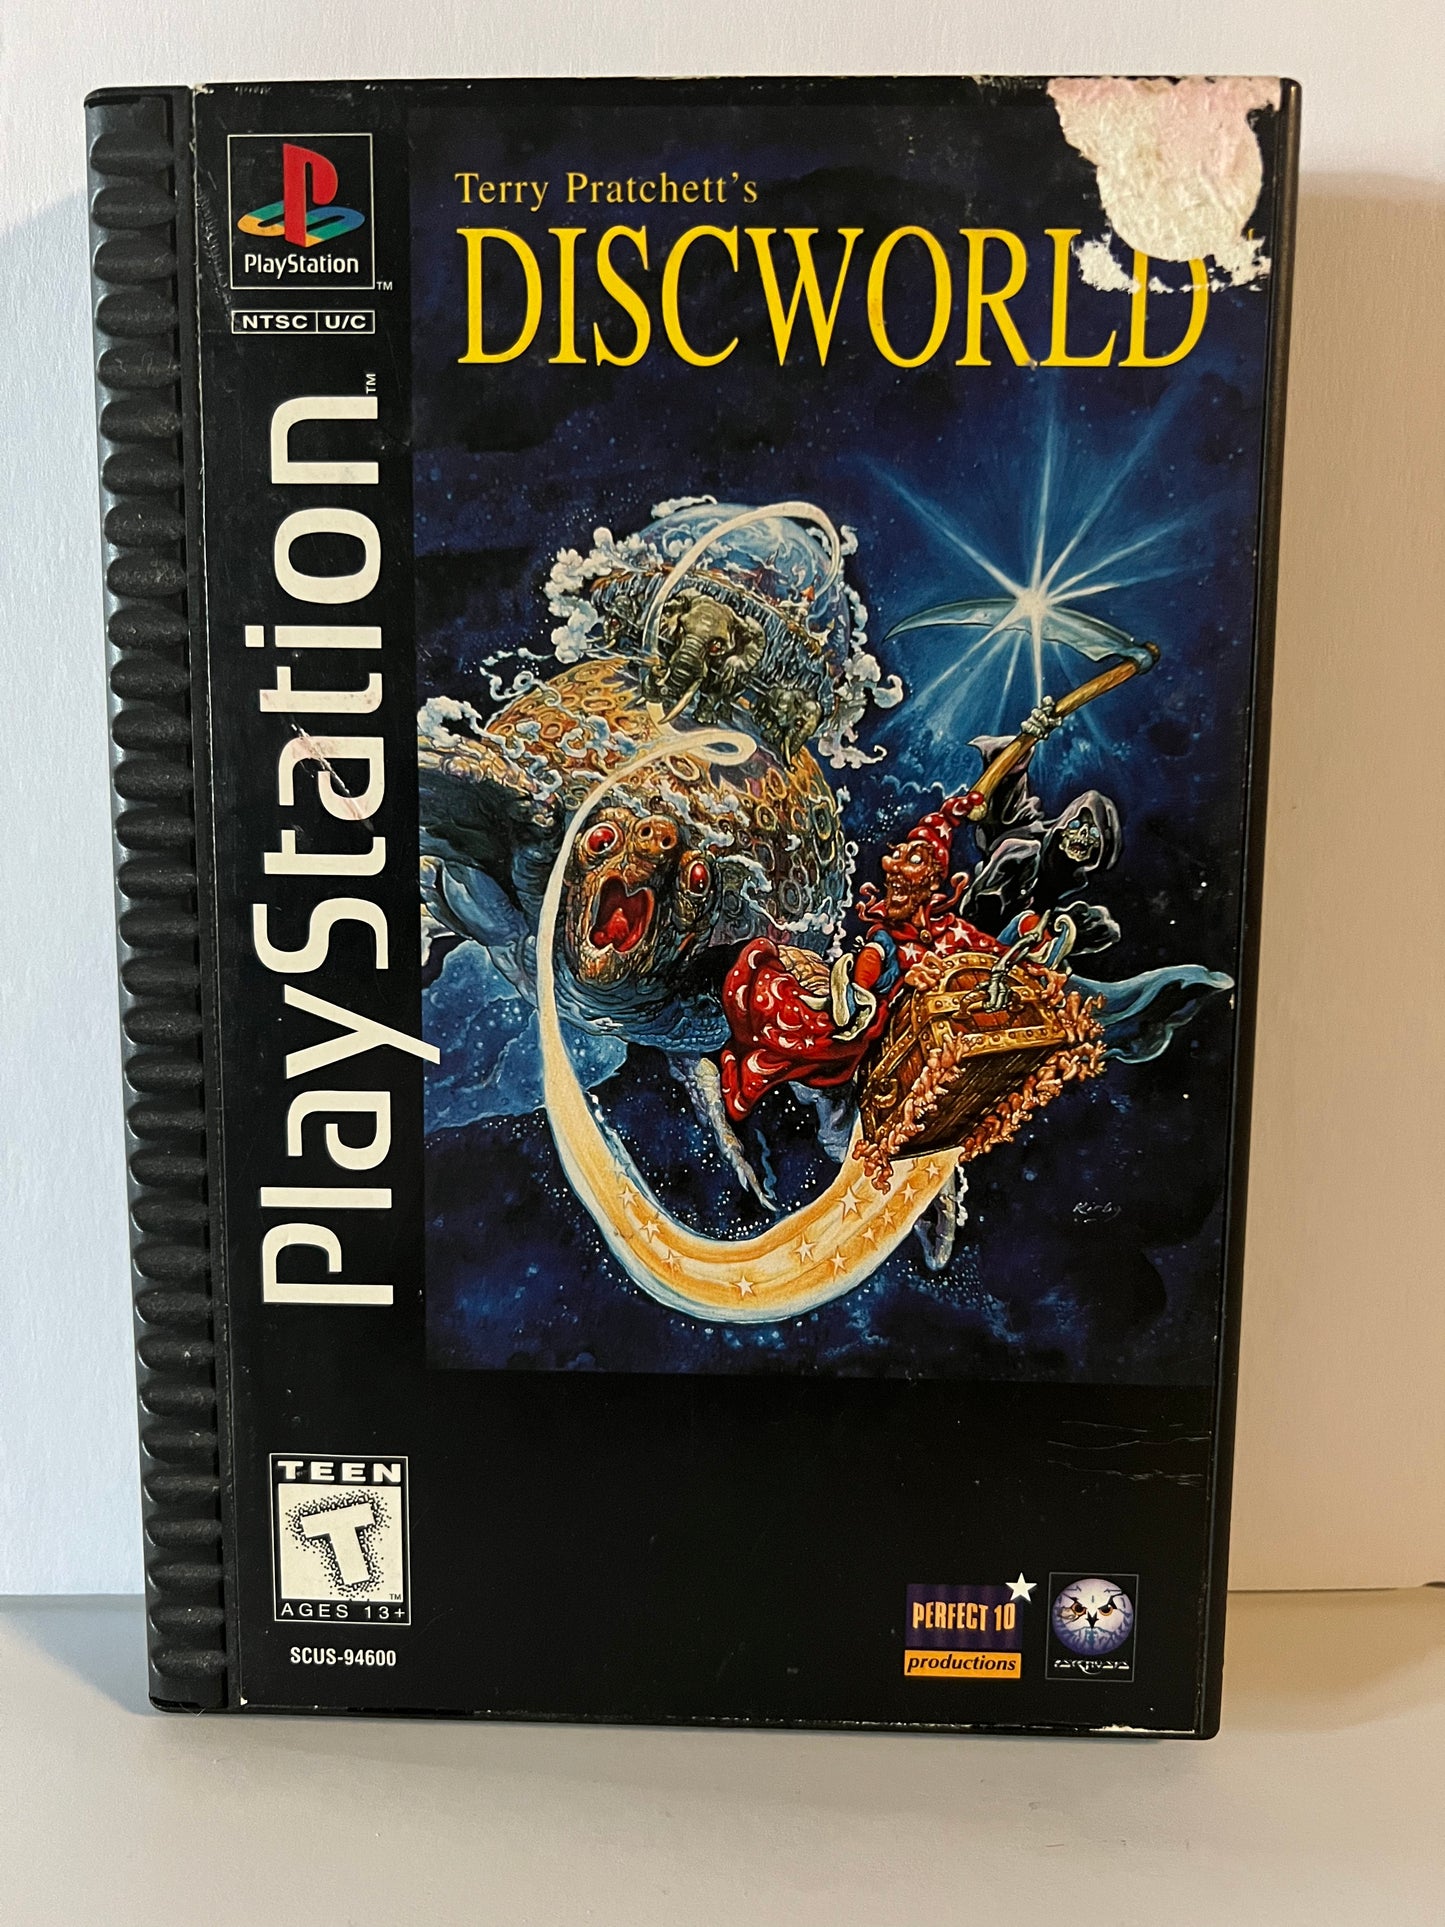 Terry Pratchett's Discworld - PS1 Game - Used